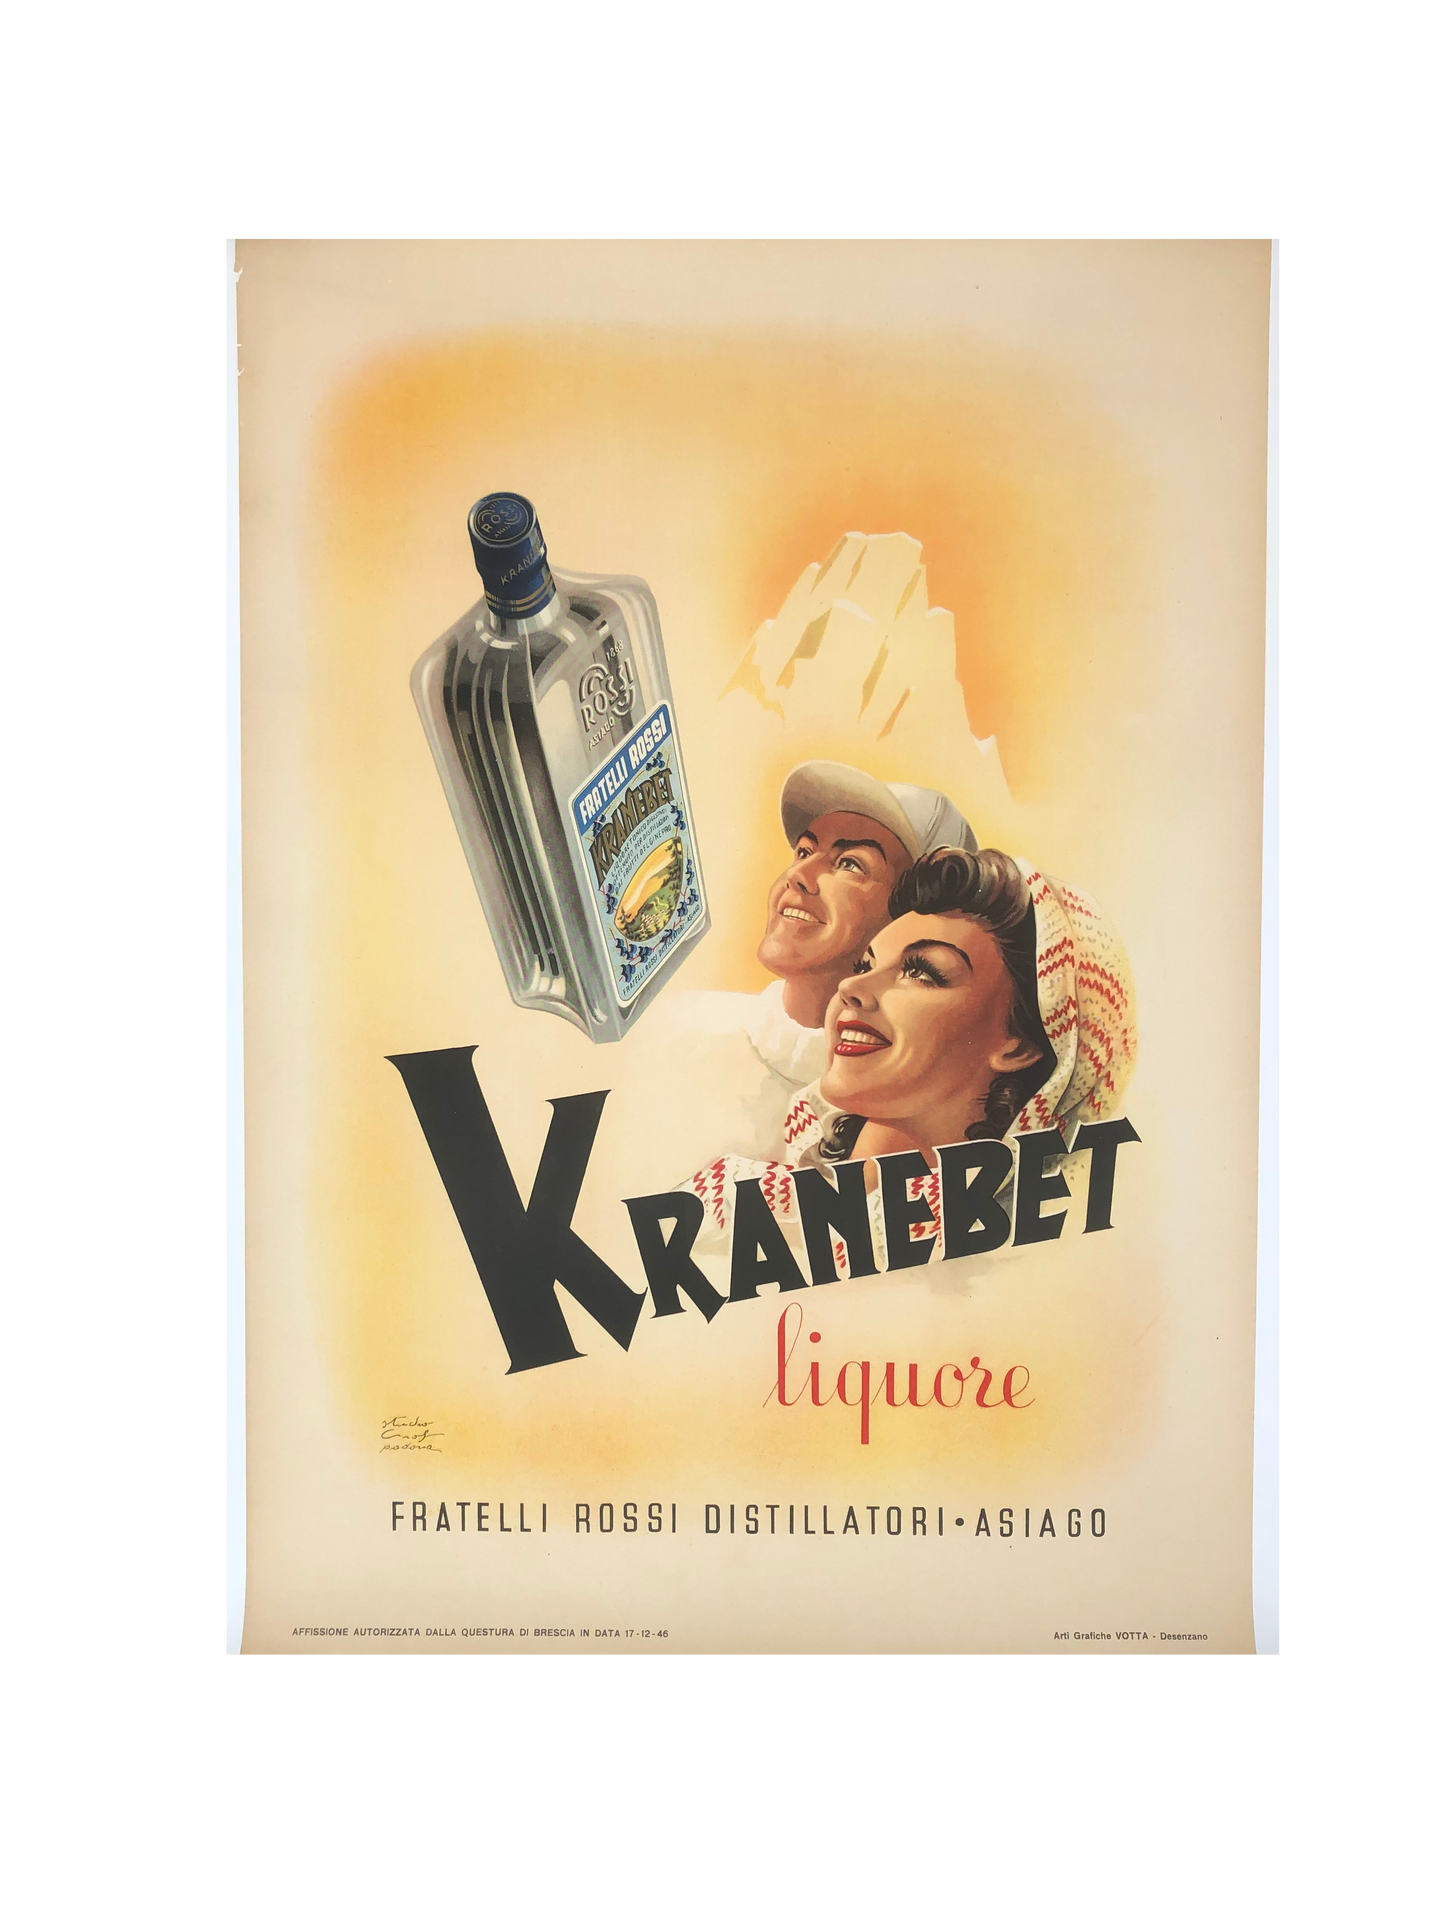 Kranebet Liquore